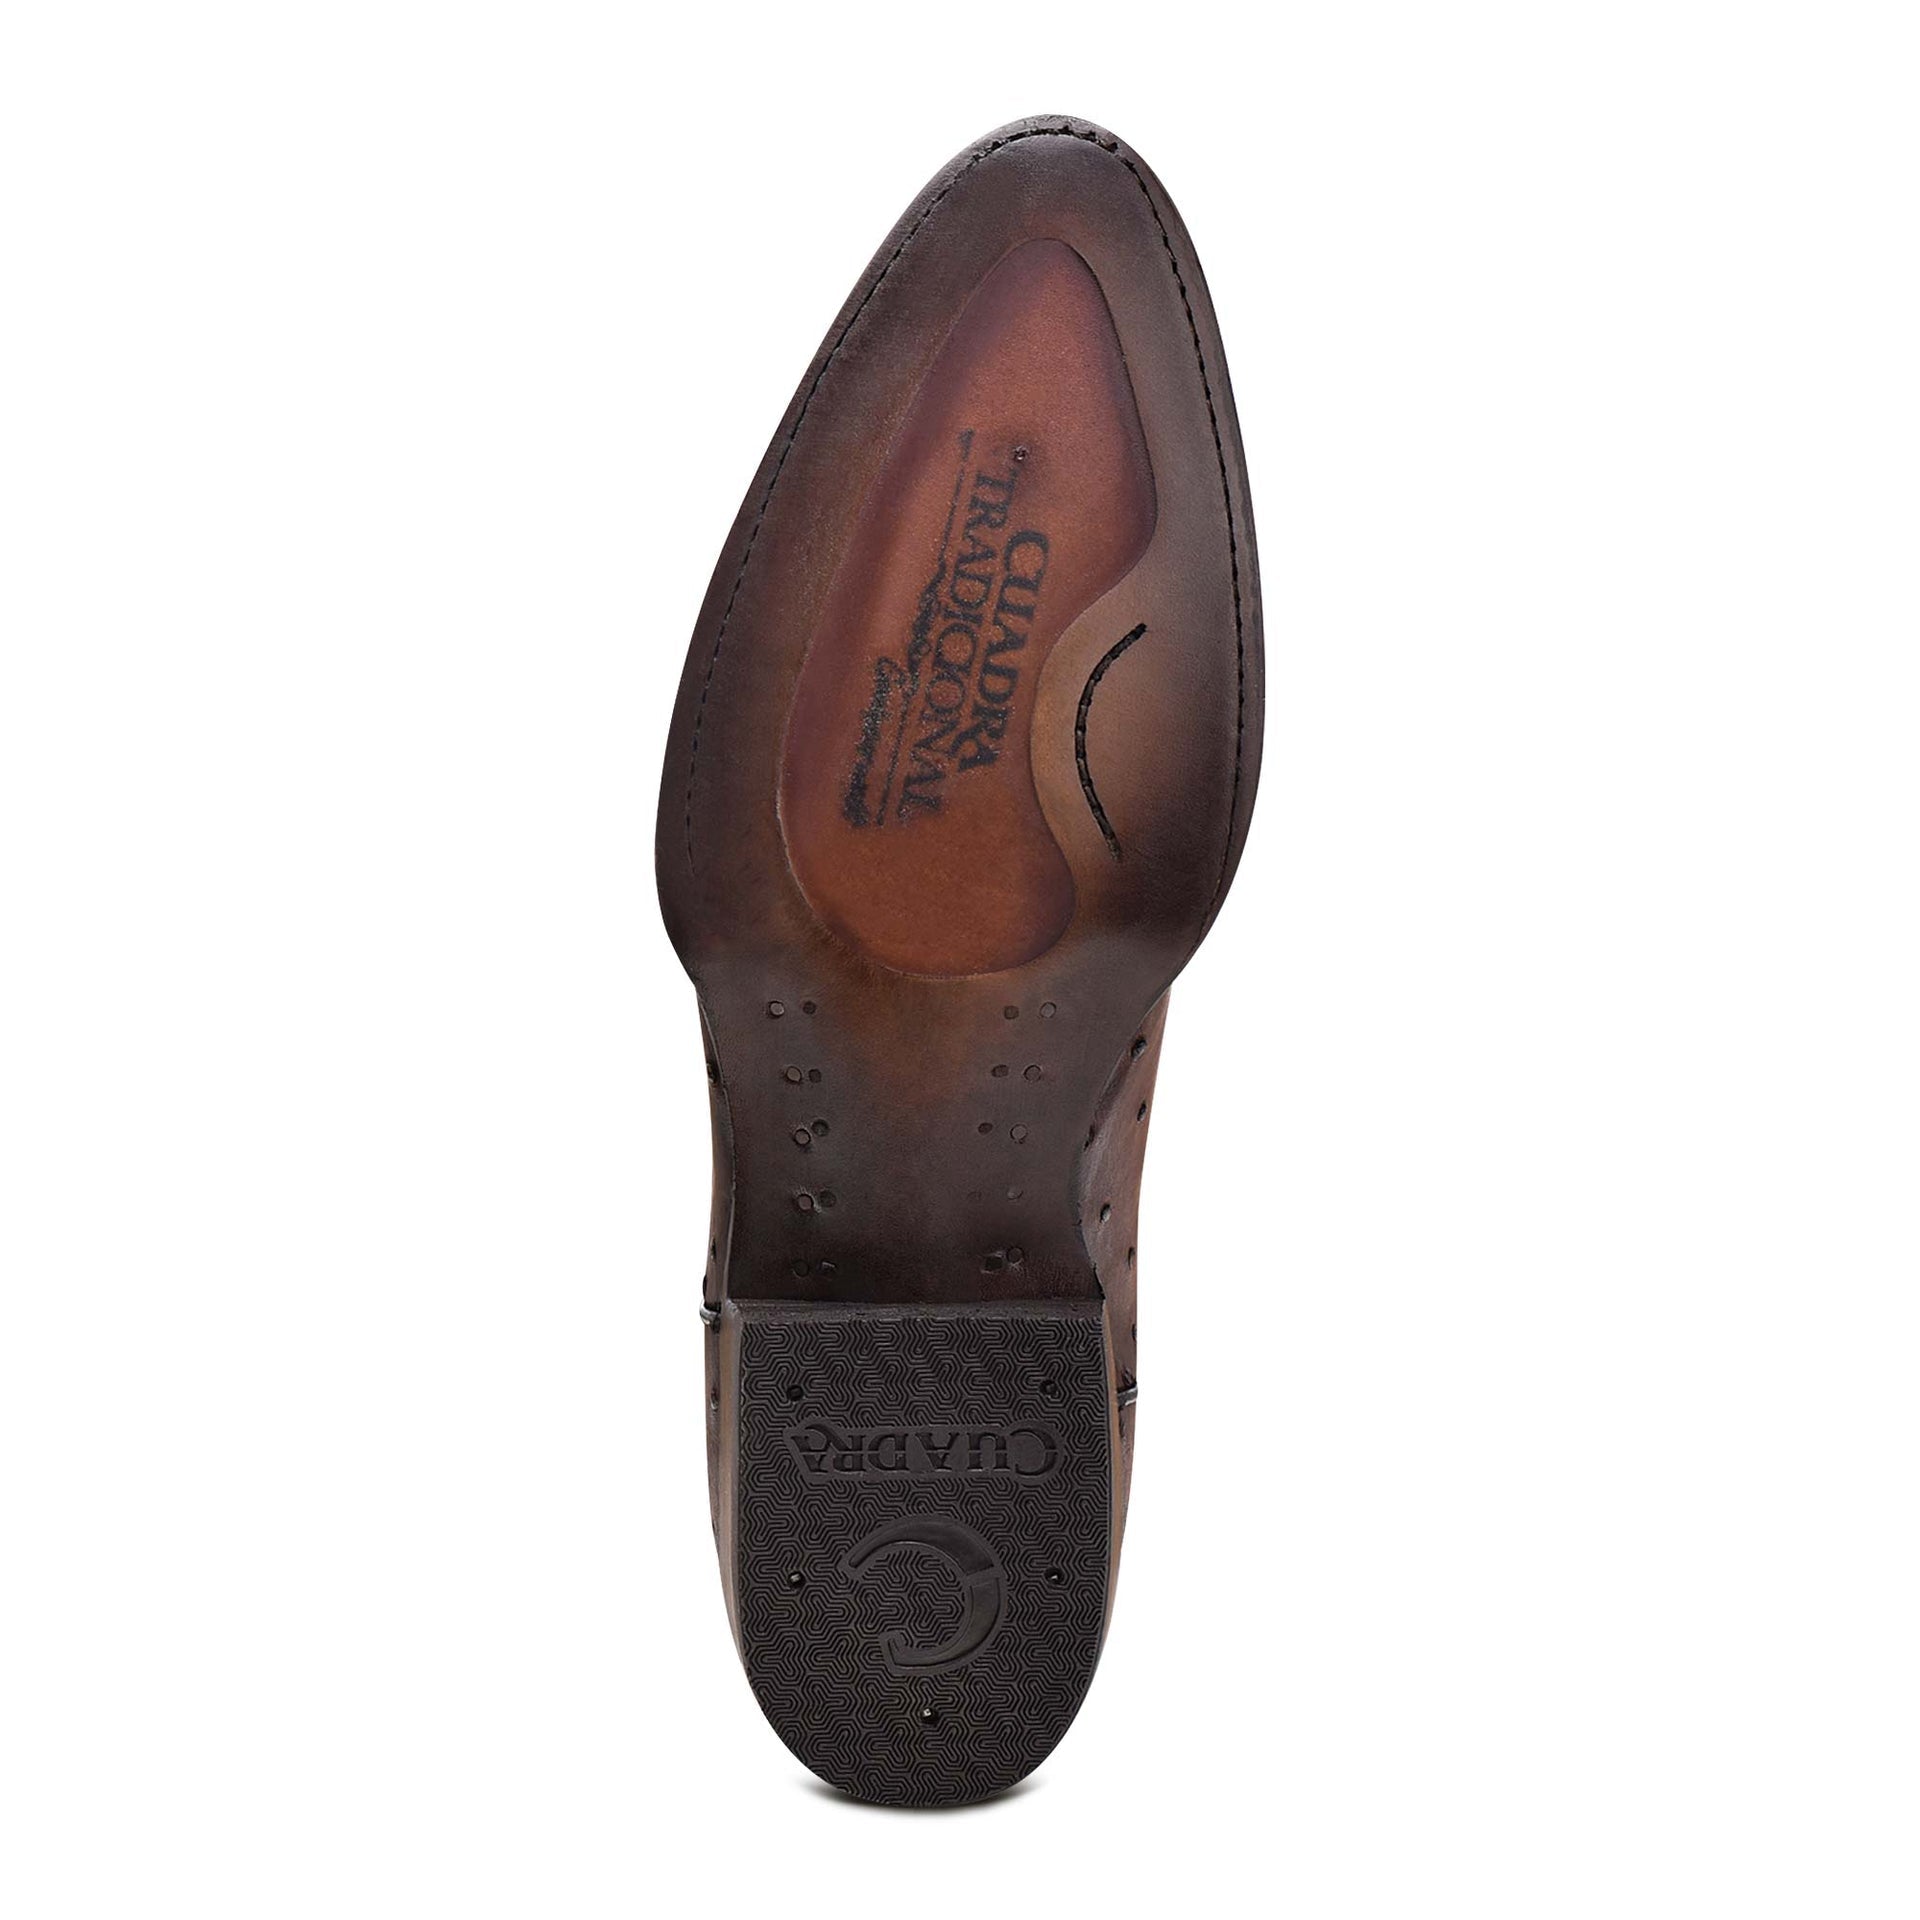 2C1NA1 - Cuadra chestnut brown dress cowboy ostrich leather boots for men-CUADRA-Kuet-Cuadra-Boots